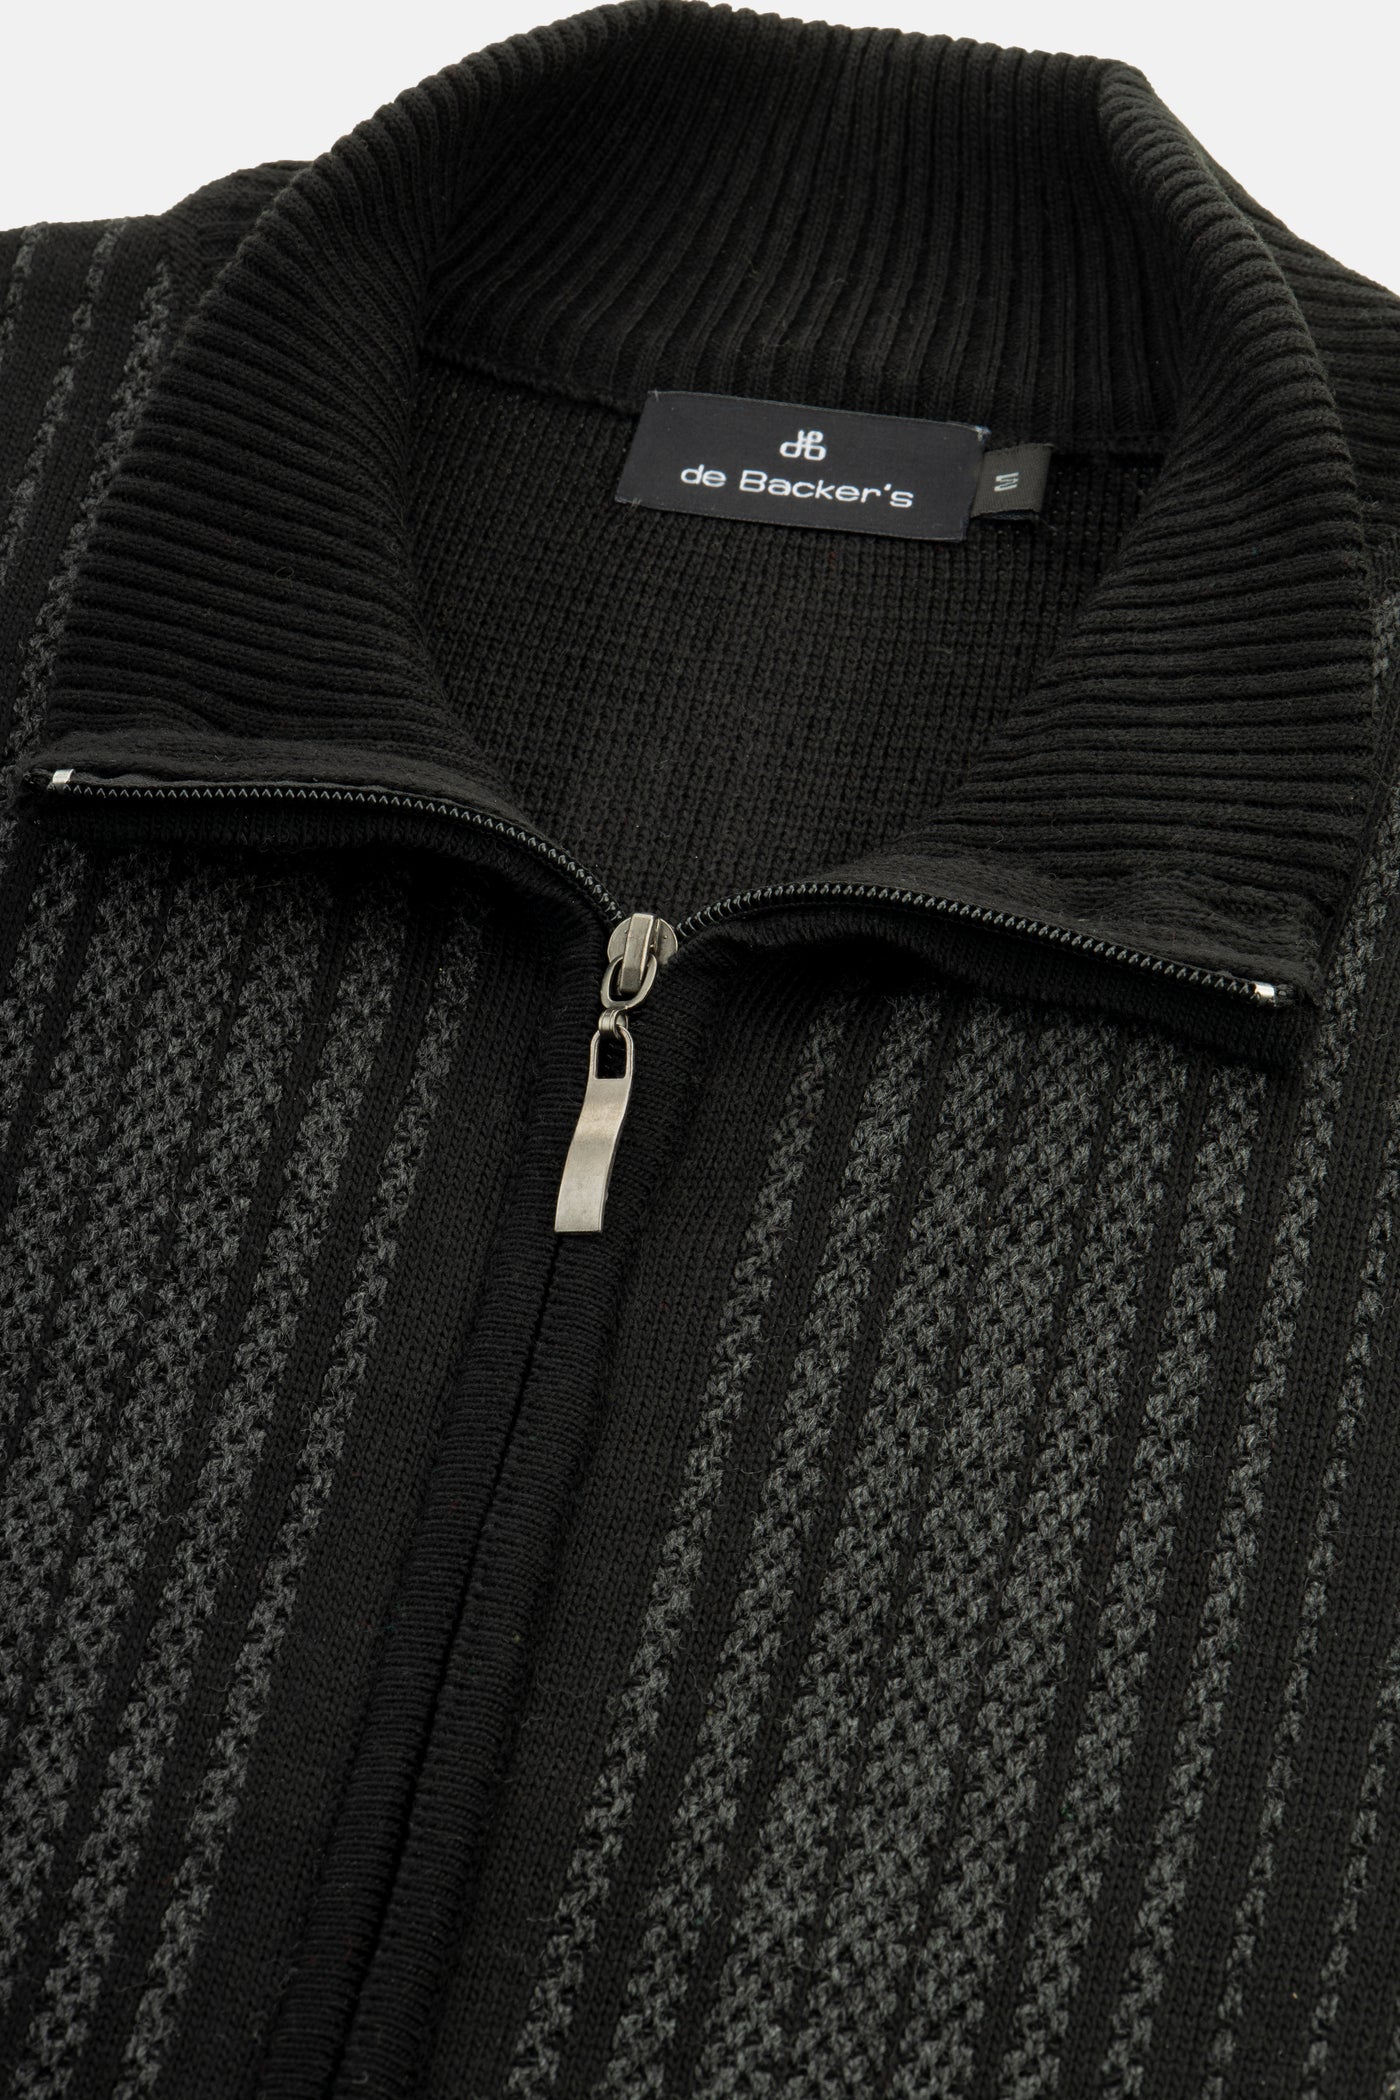 Jacquard Black & Dark Gray Knitted Jacket